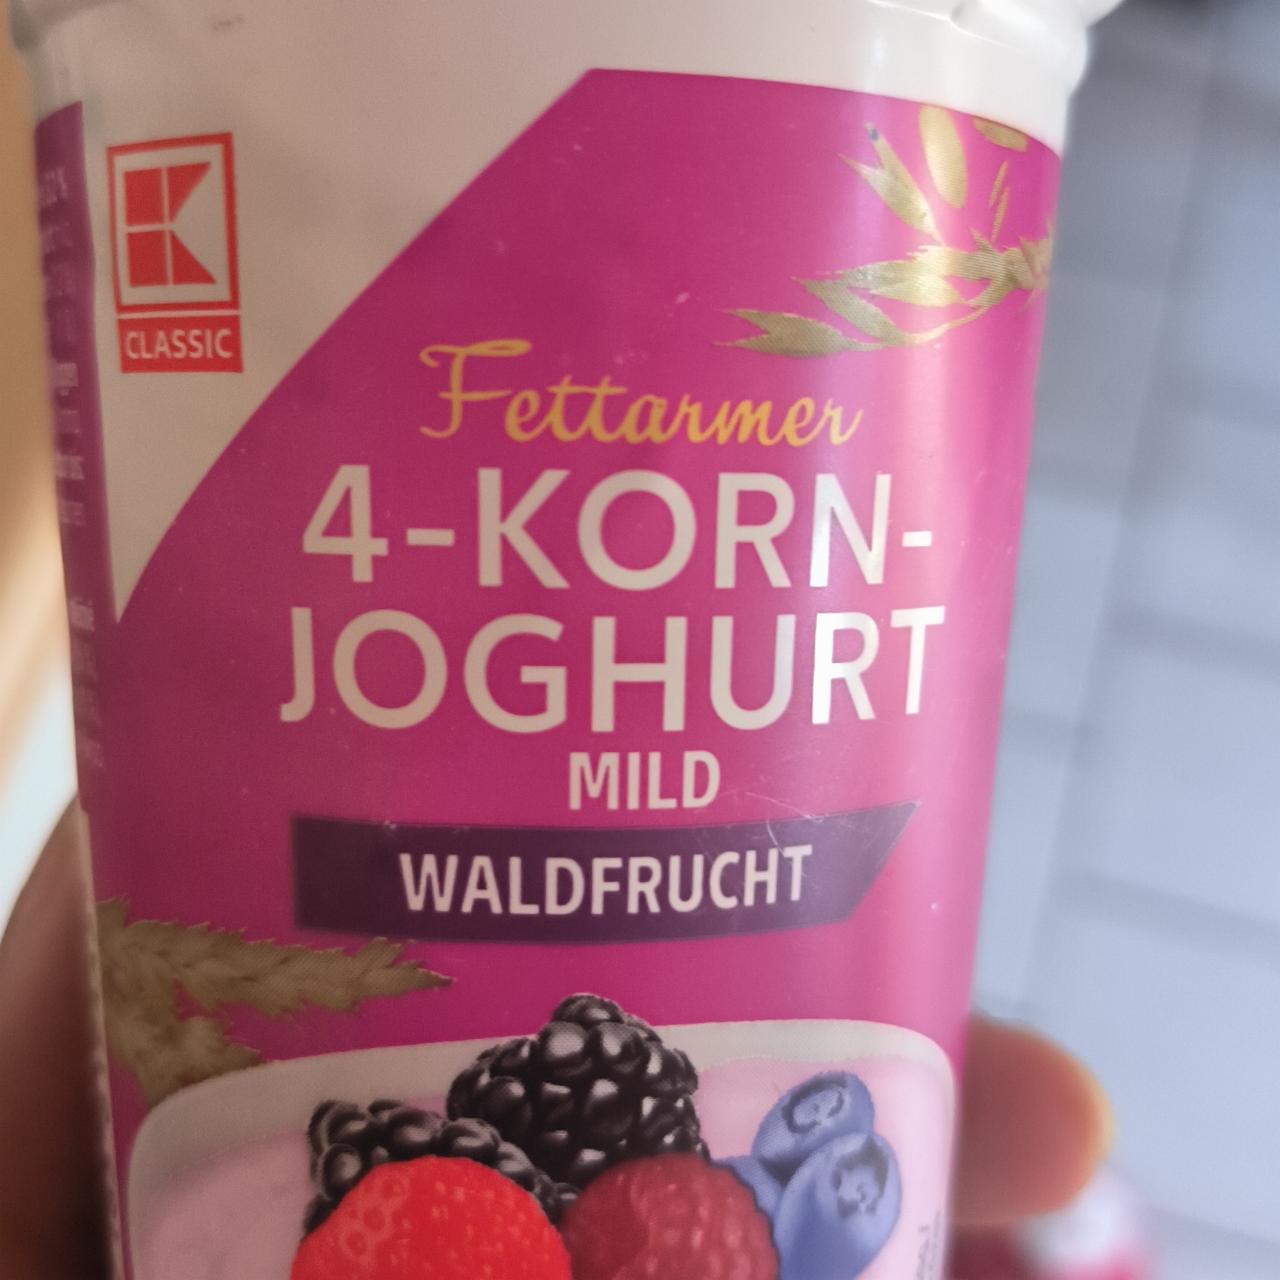 Fotografie - yoghurt drink forest fruit